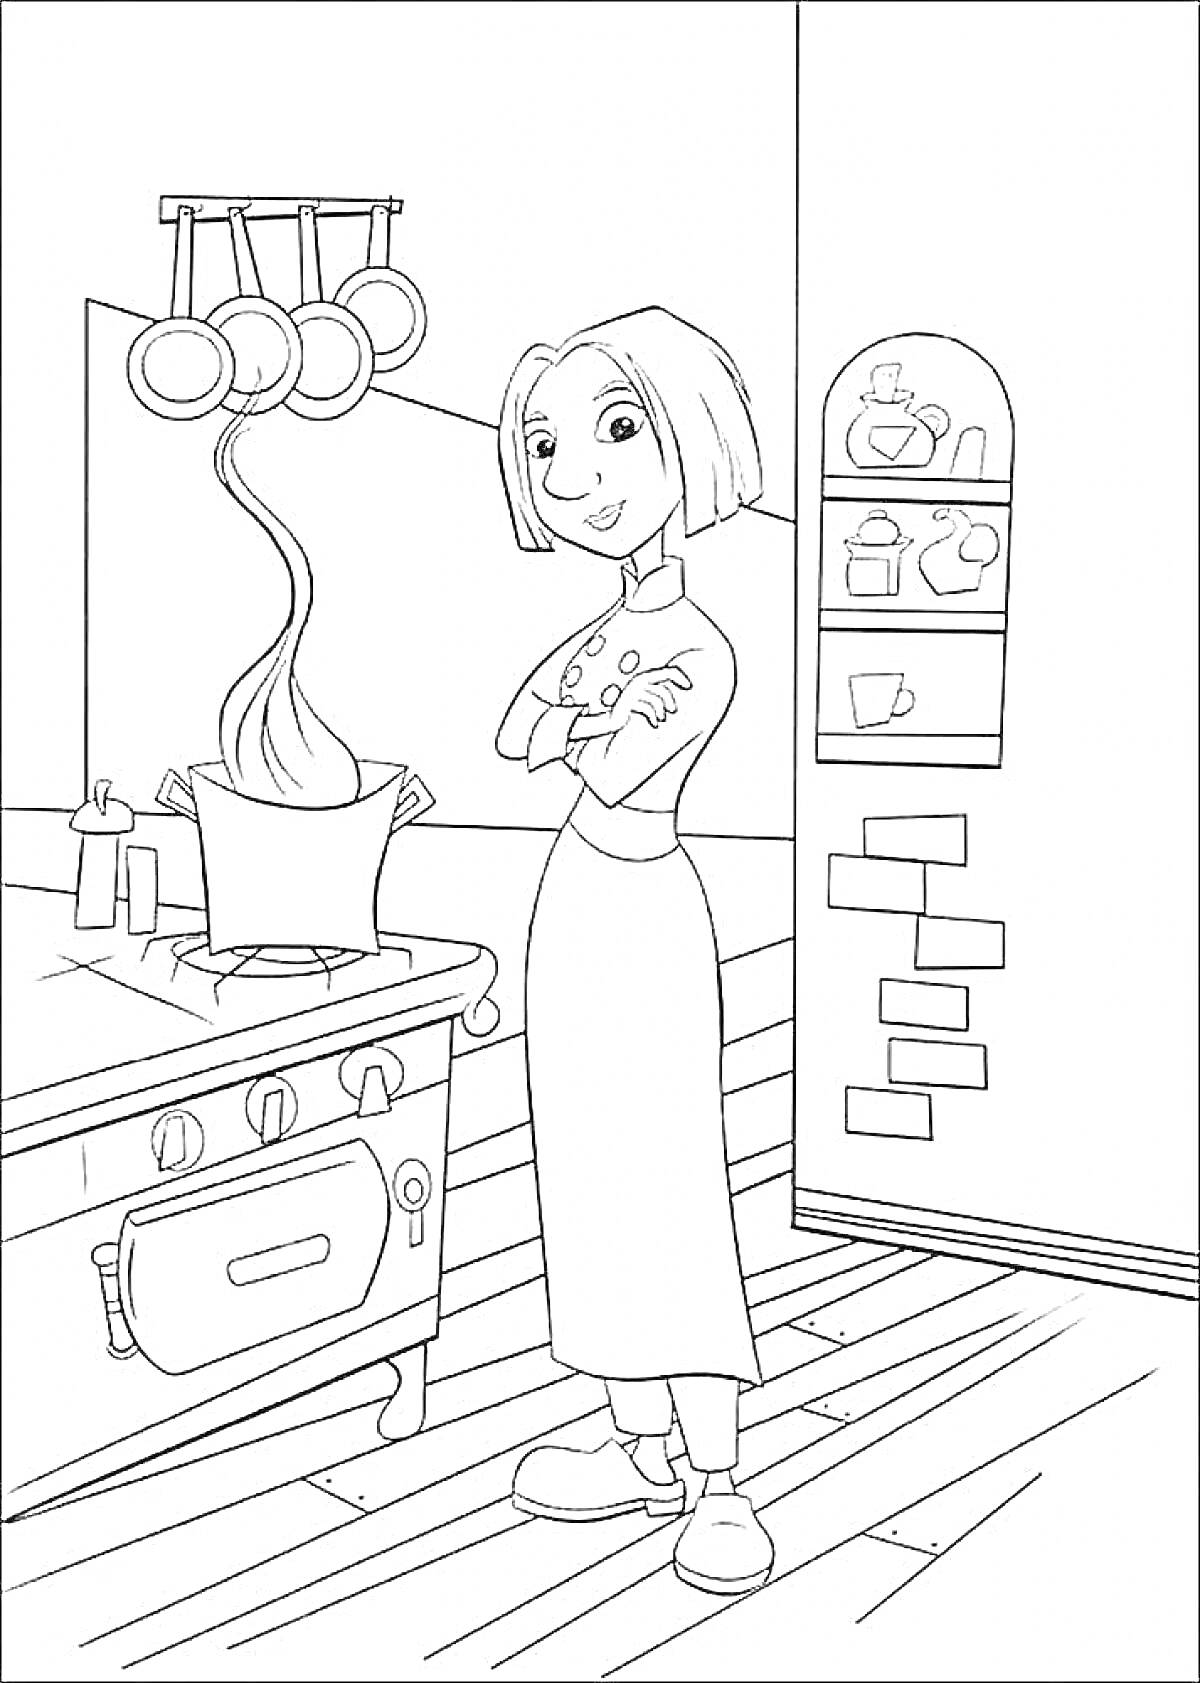 На раскраске изображено: Кухня, Волшебство, Девочка, Плита, Дым, Полки, Посуда, Пол, Кастрюли